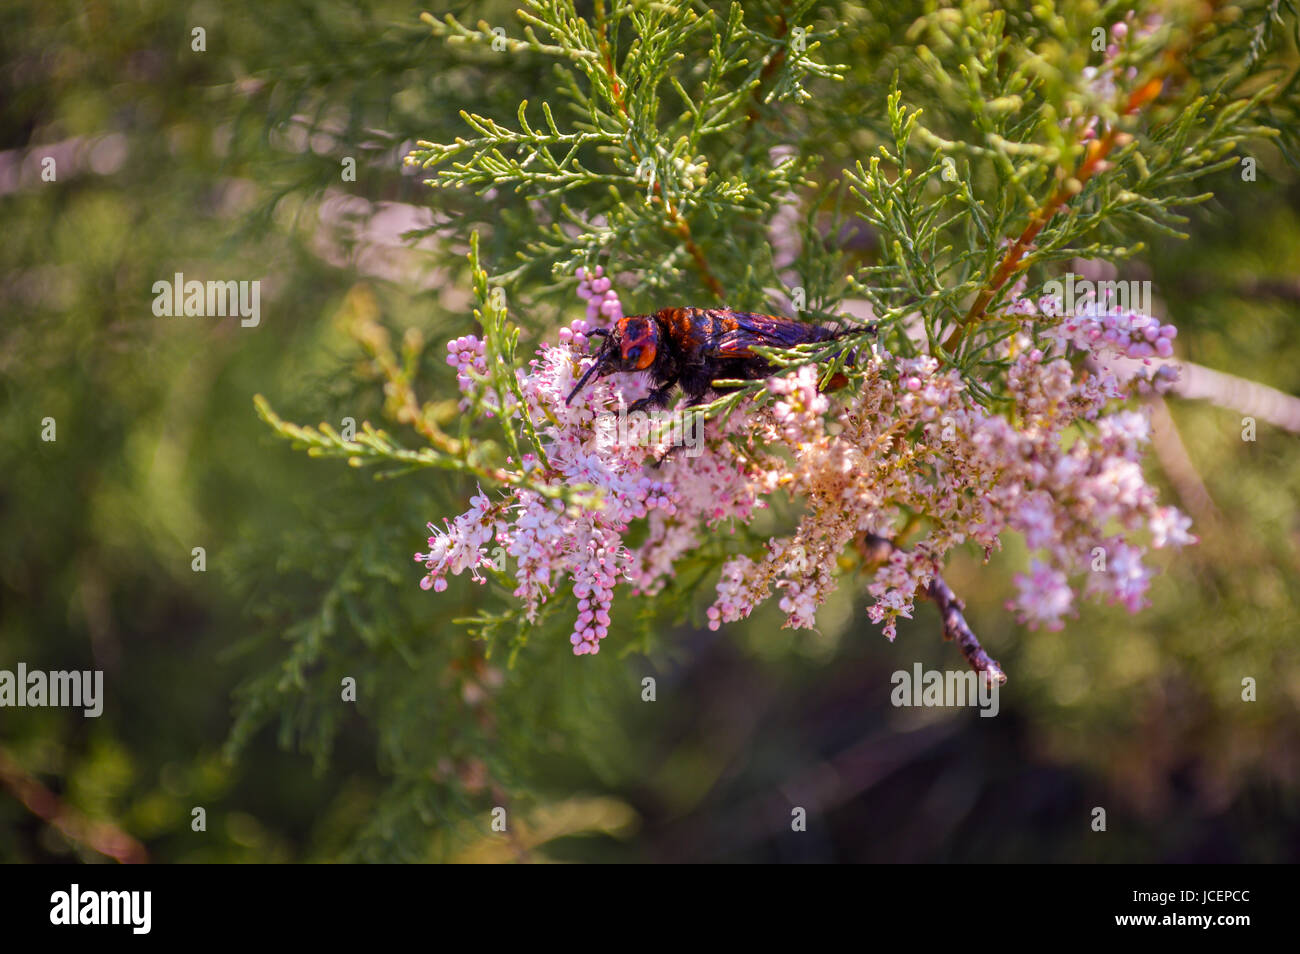 A firebug (Pyrrhocoris apterus) on a blooming branch, the island of Krk, Croatia Stock Photo